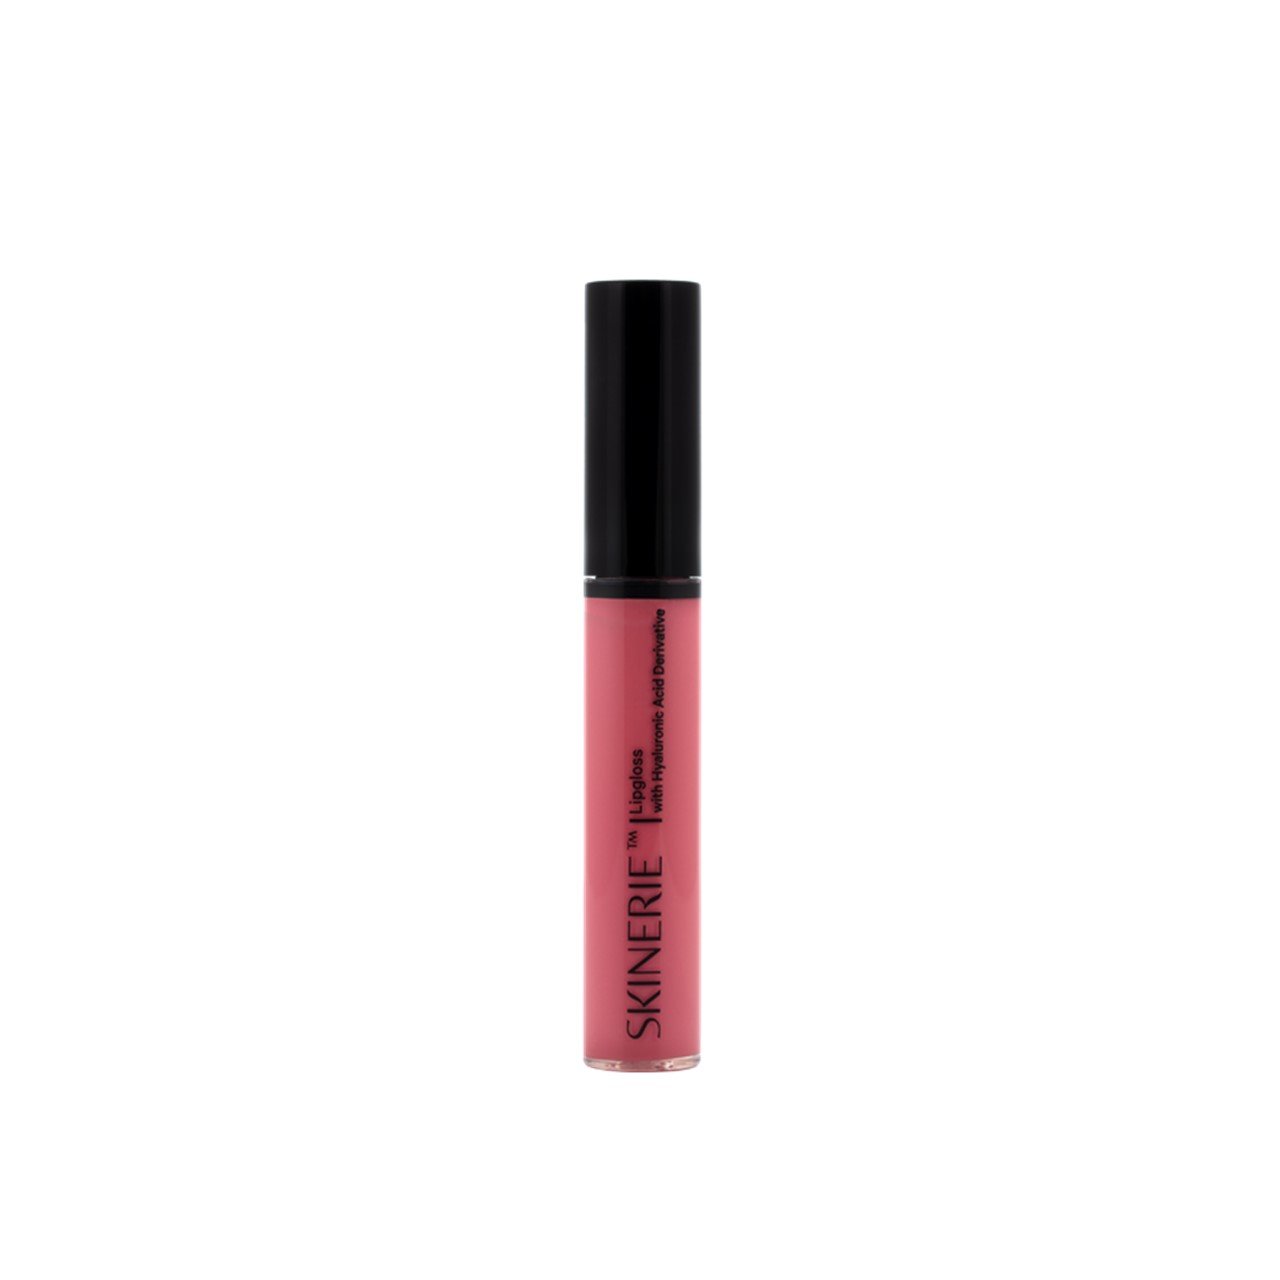 Skinerie Lips Lip Gloss 02 Pink 9ml (0.30fl oz)